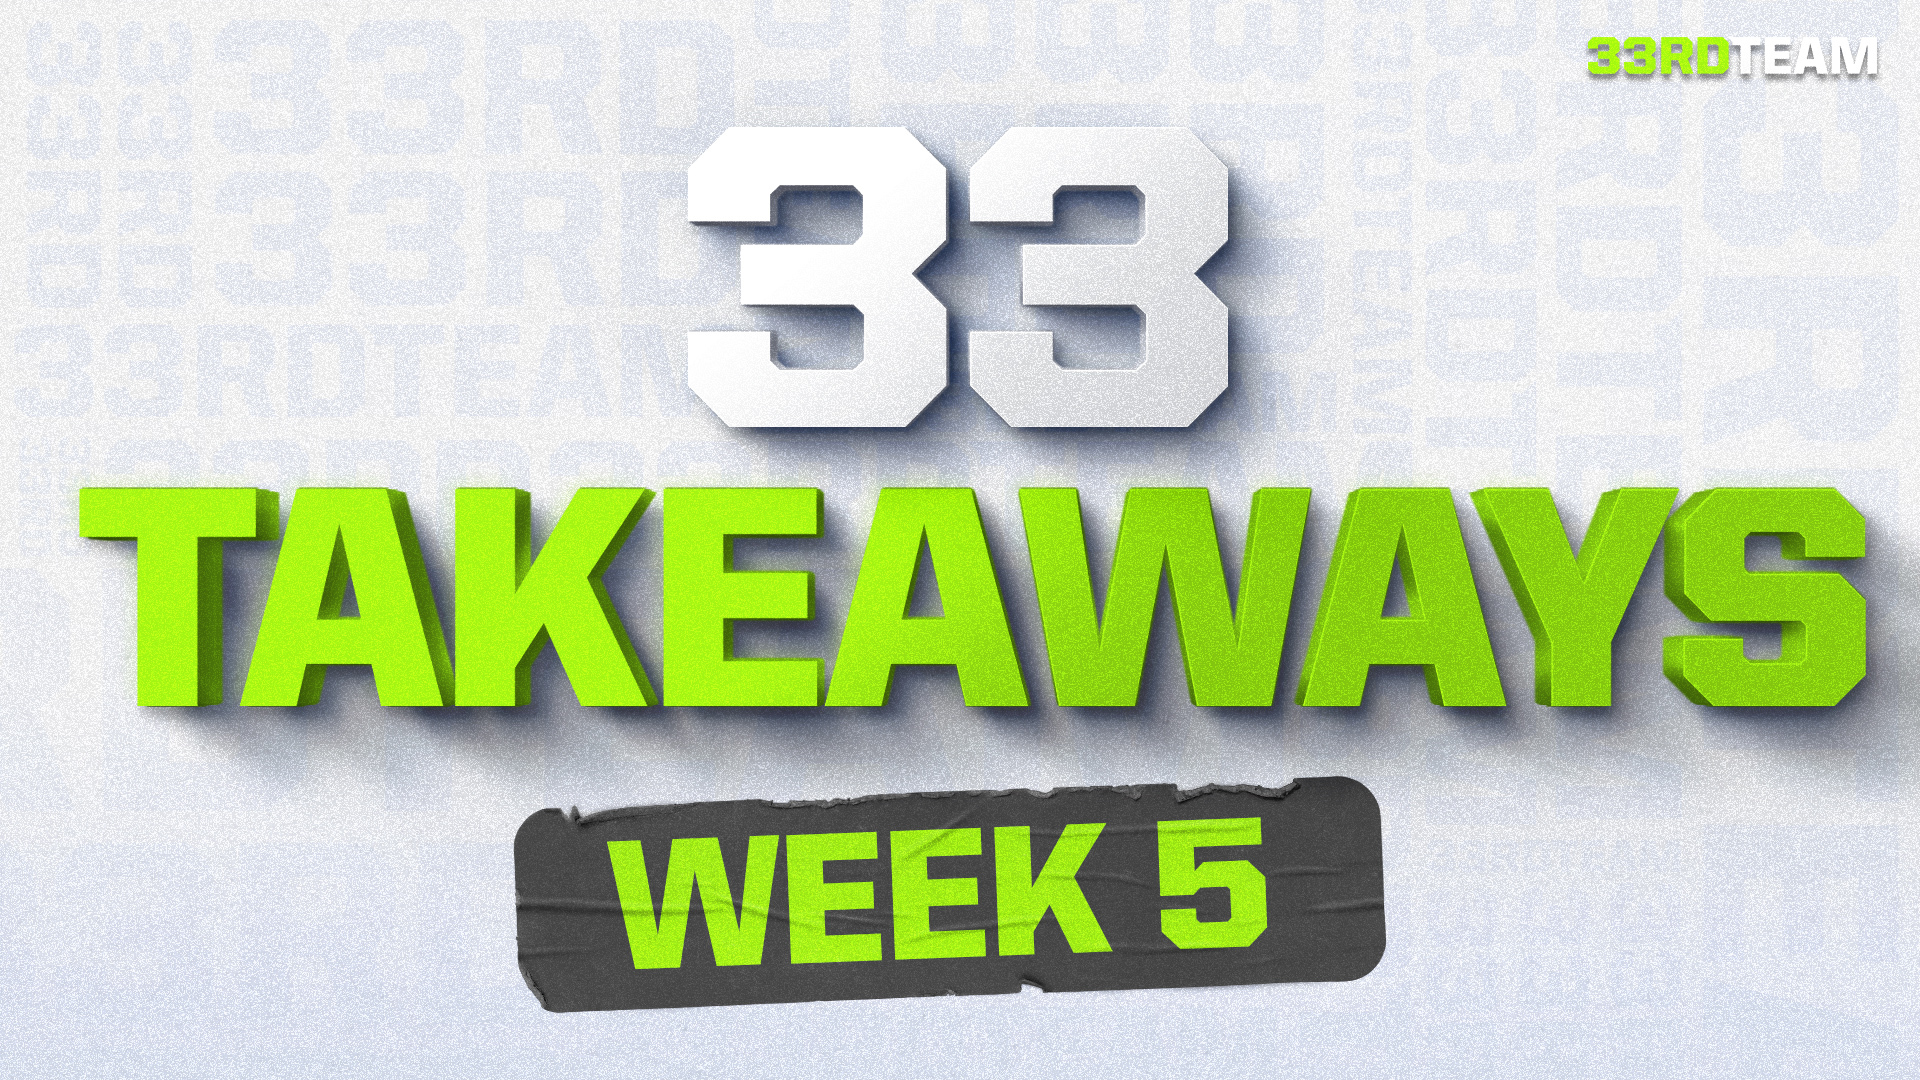 What We Learned: 33 Expert Takeaways From Week 5